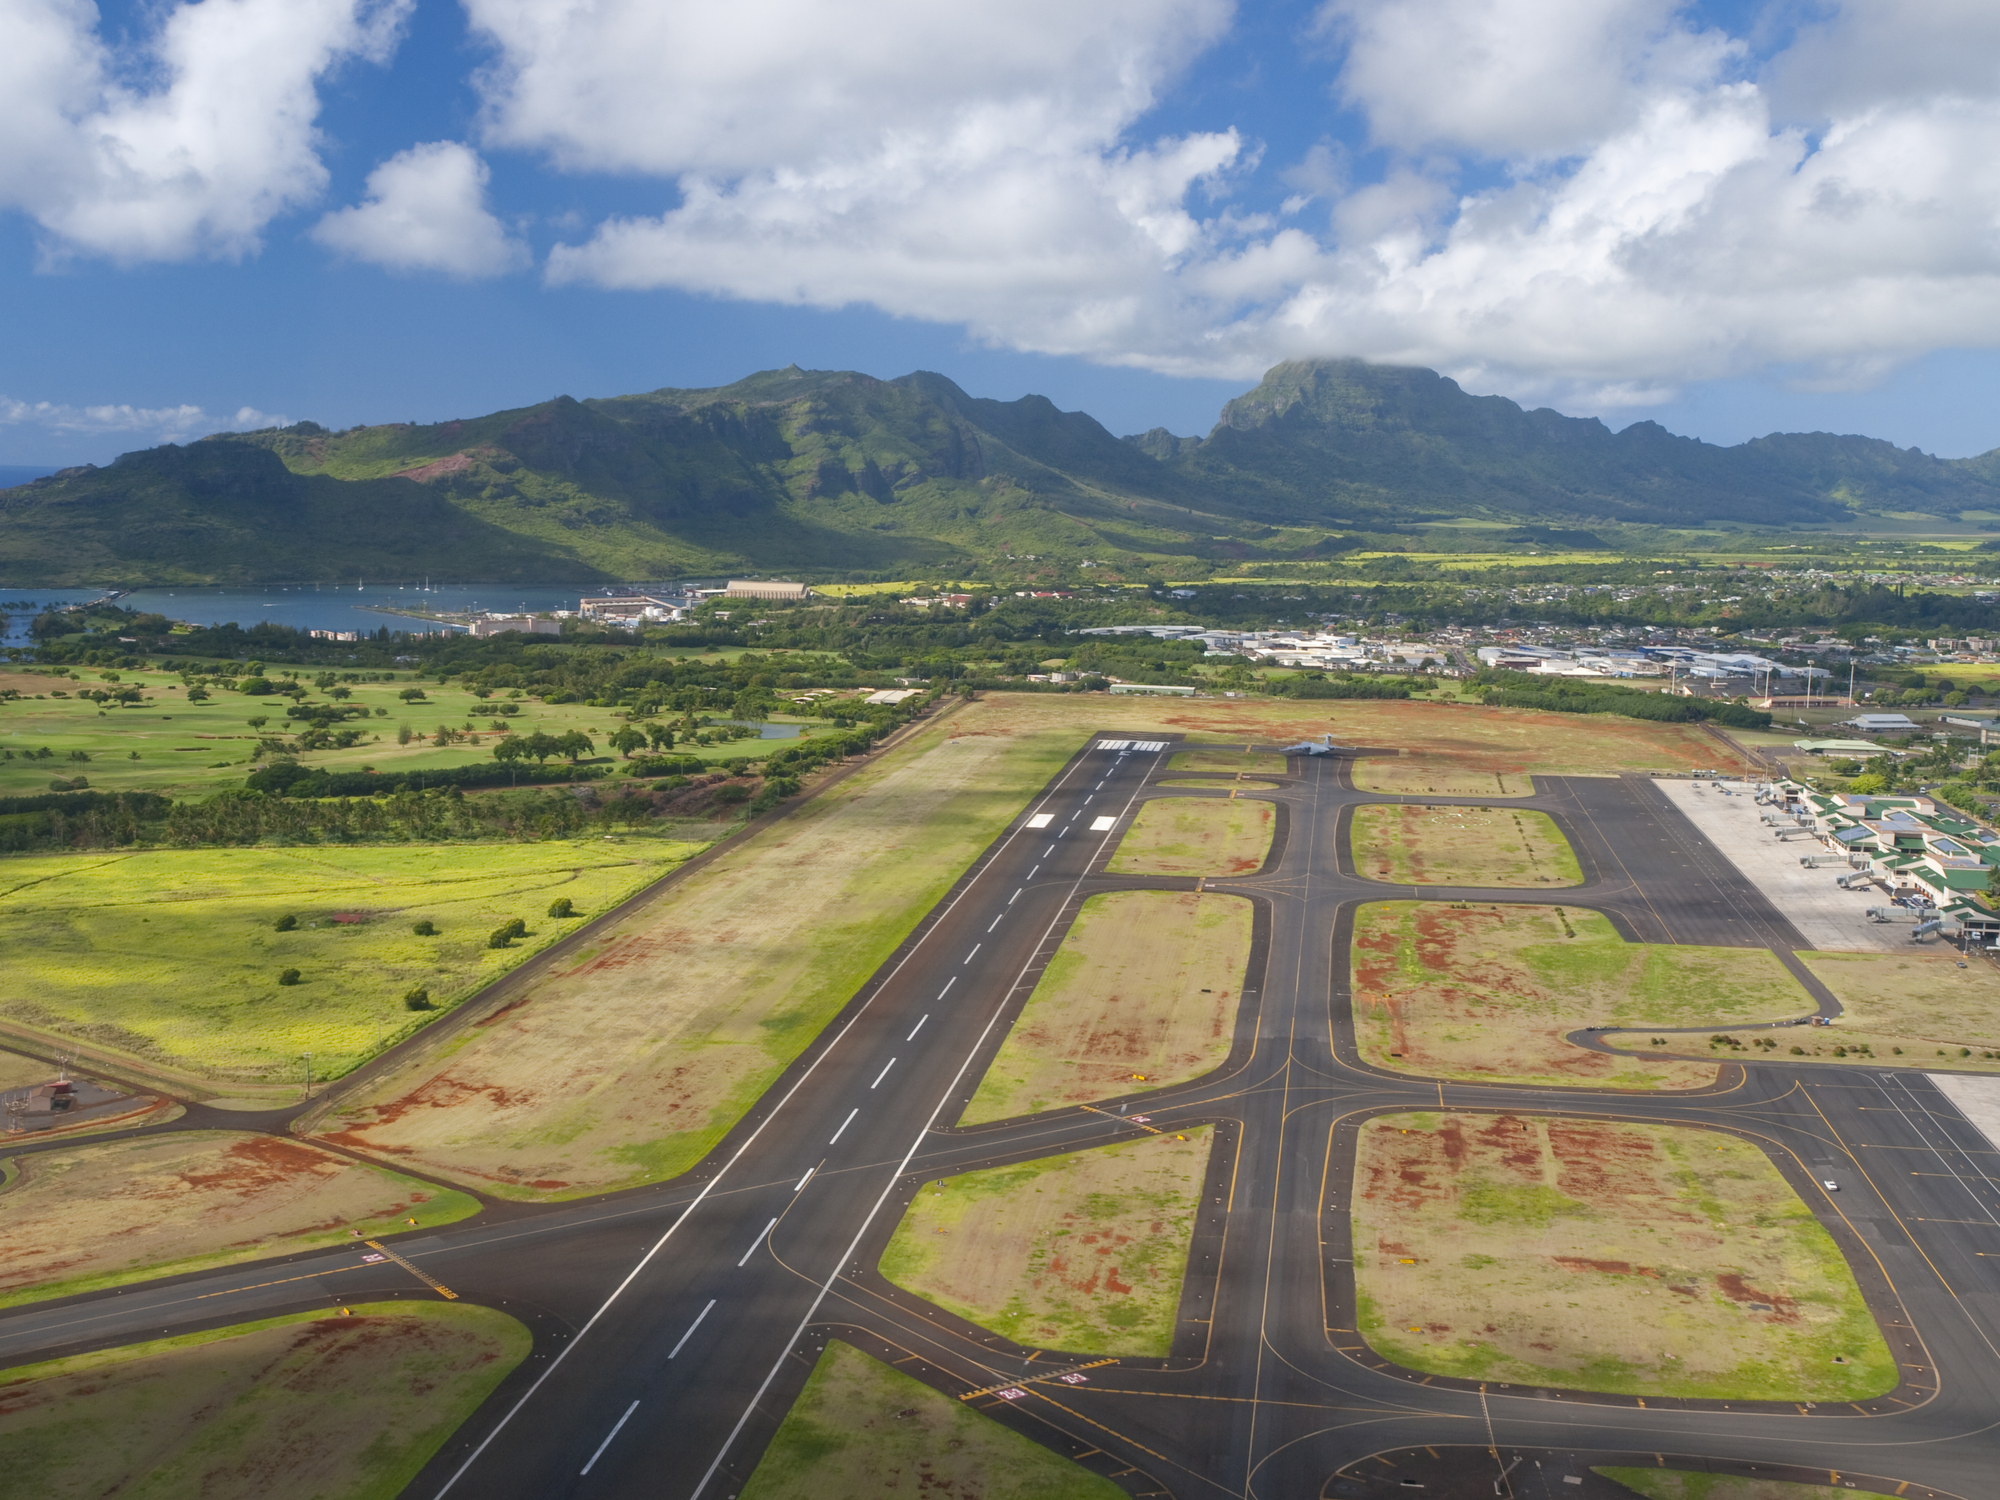 Lihue Airport of Kauai, Hawaii